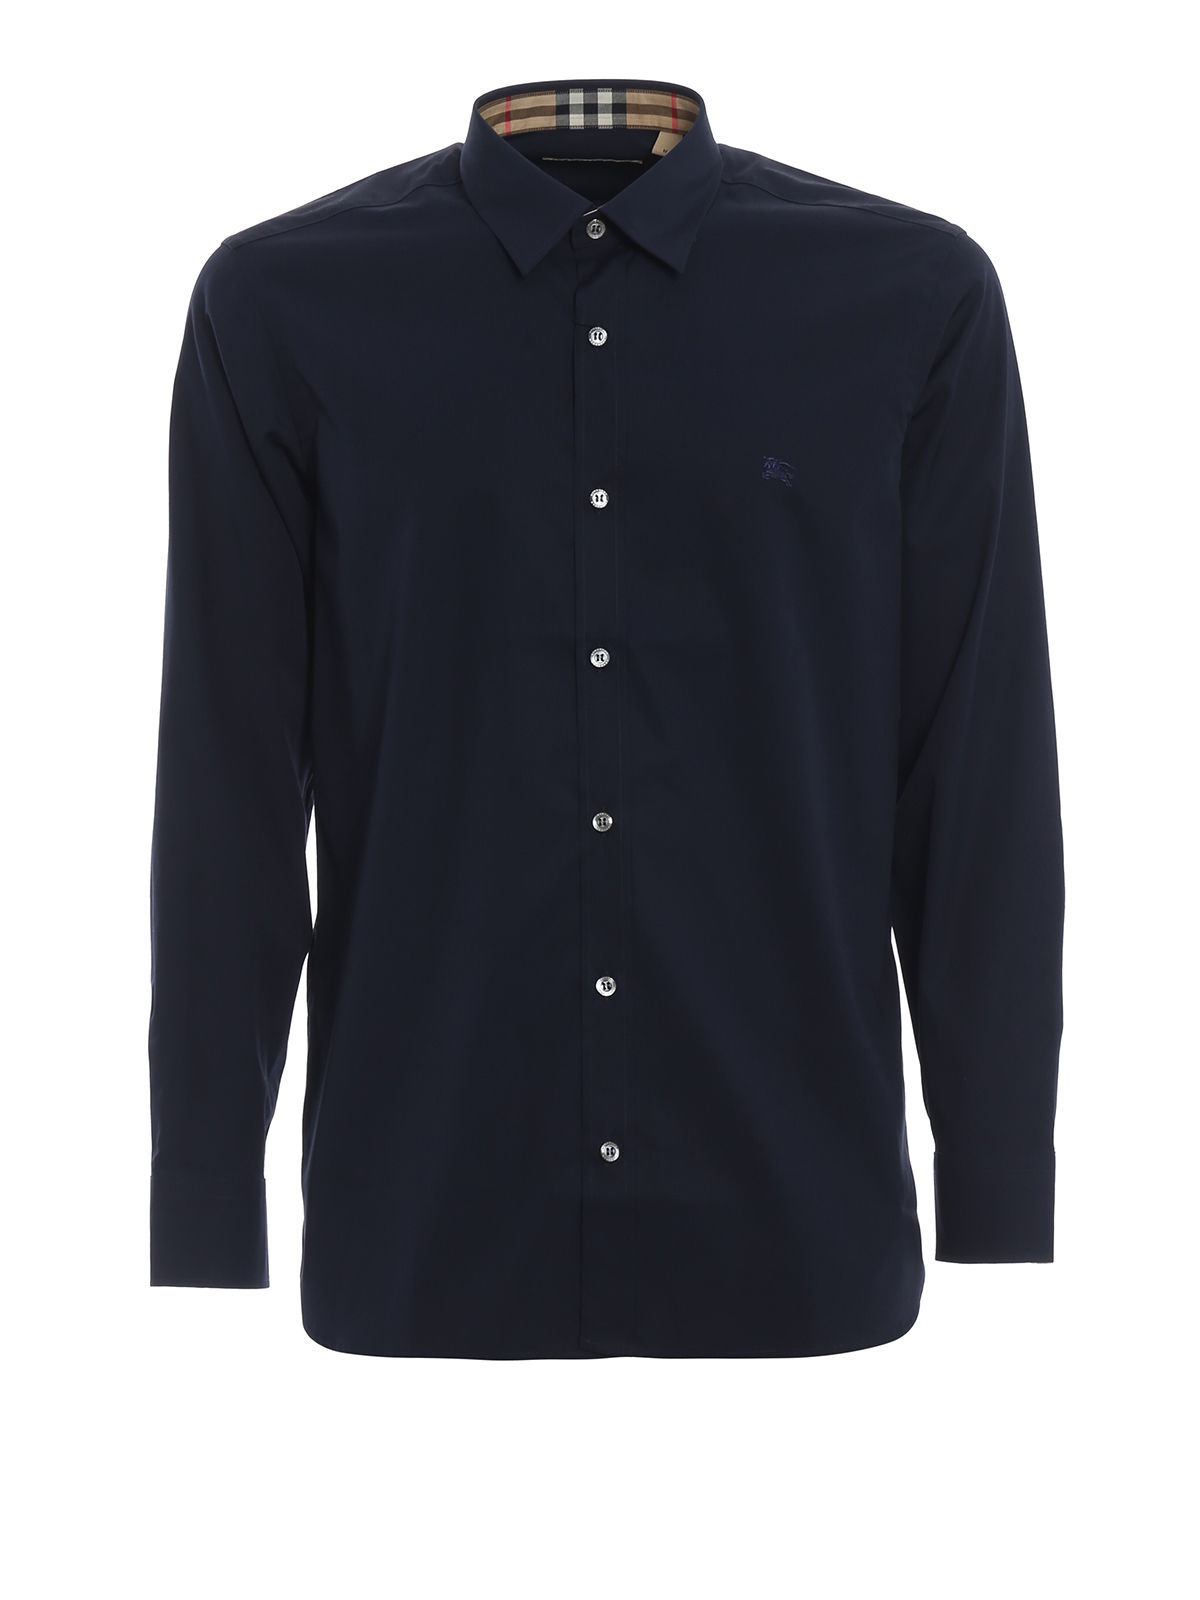 burberry shirt navy blue